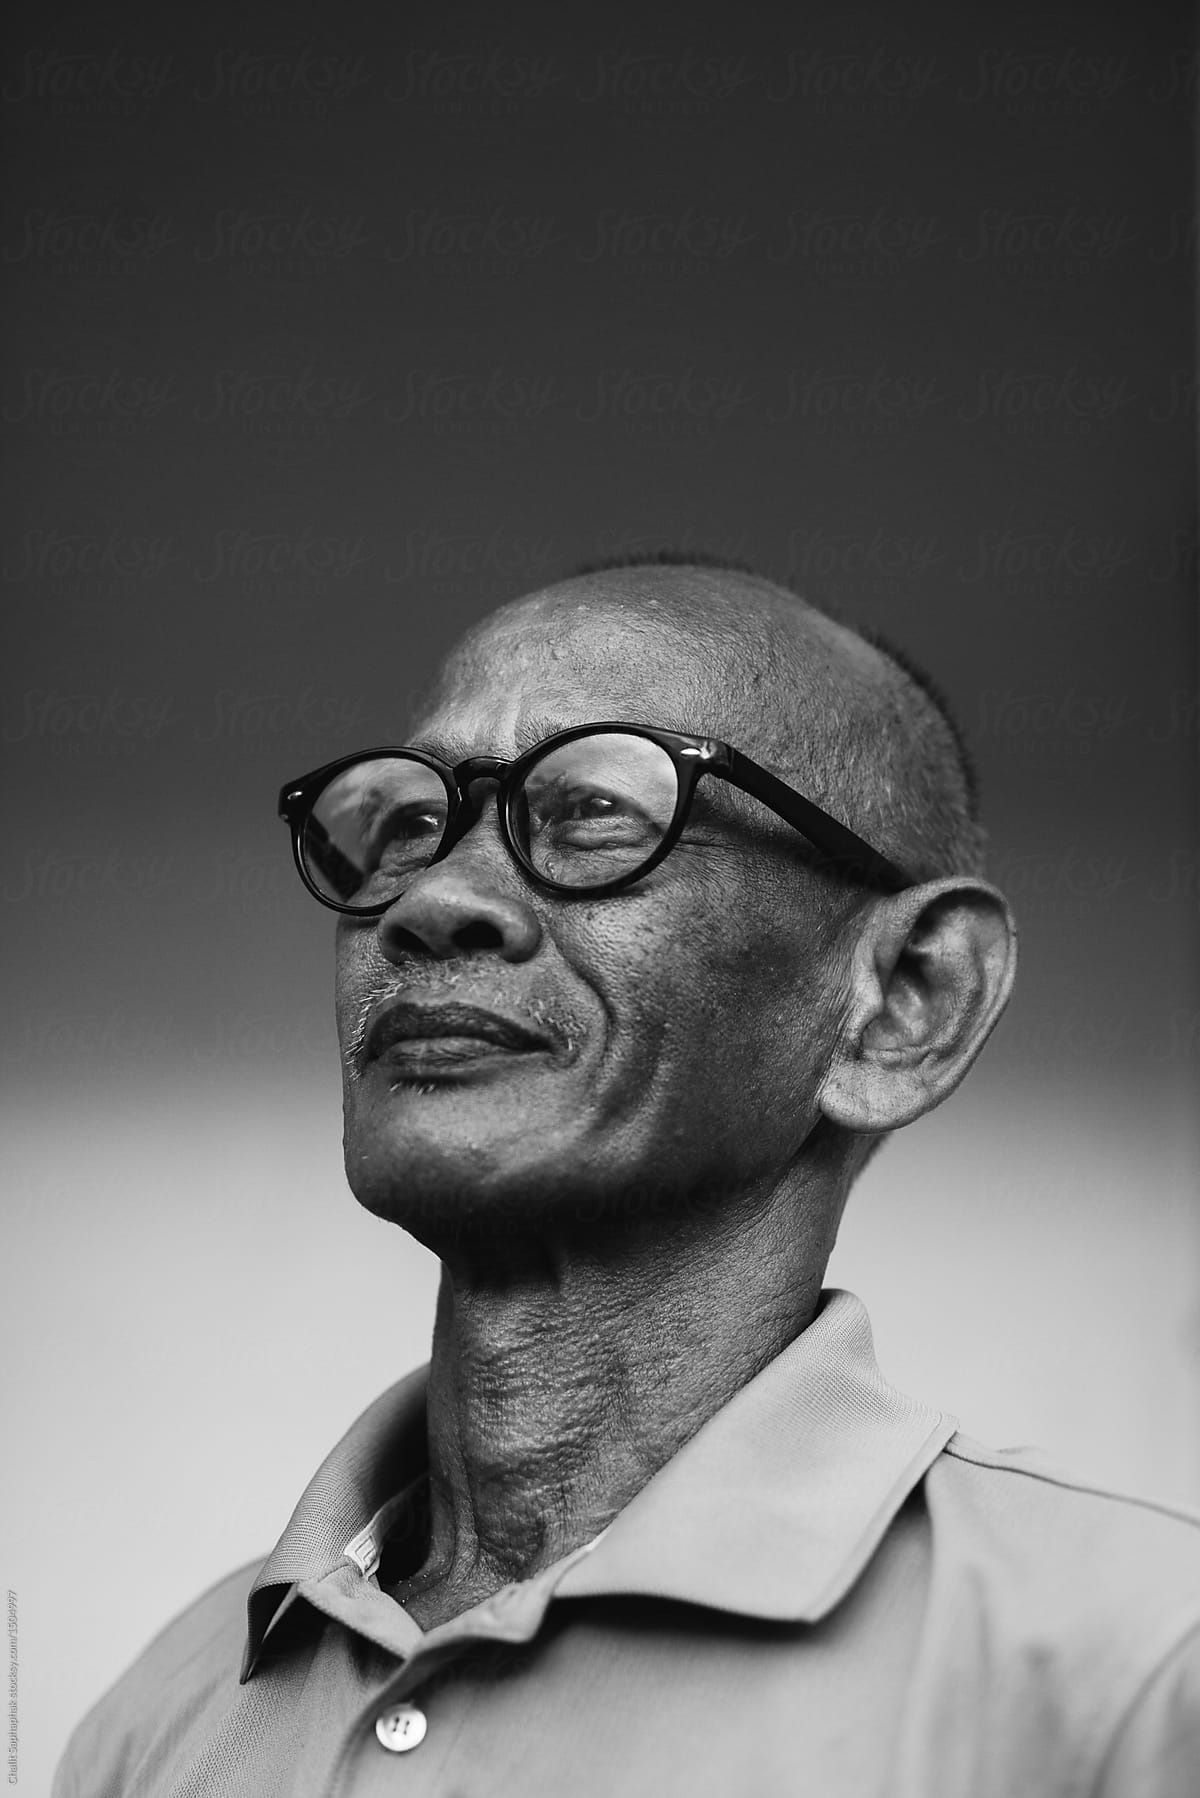 Portrait of Asian man wearing glasses